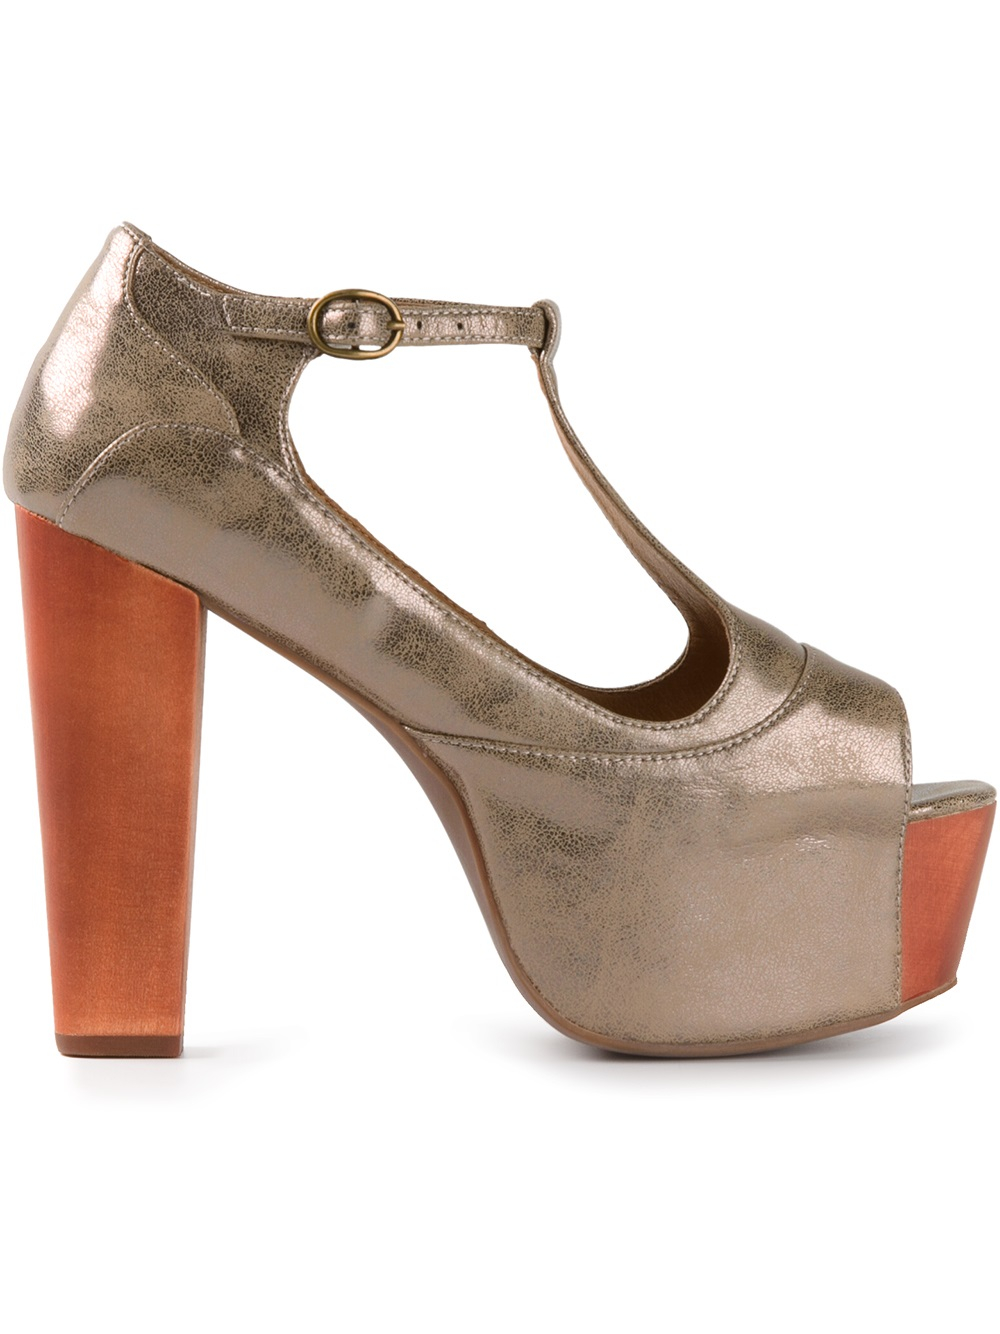 Jeffrey Campbell Foxywood Platform Sandals in Orange (metallic) | Lyst